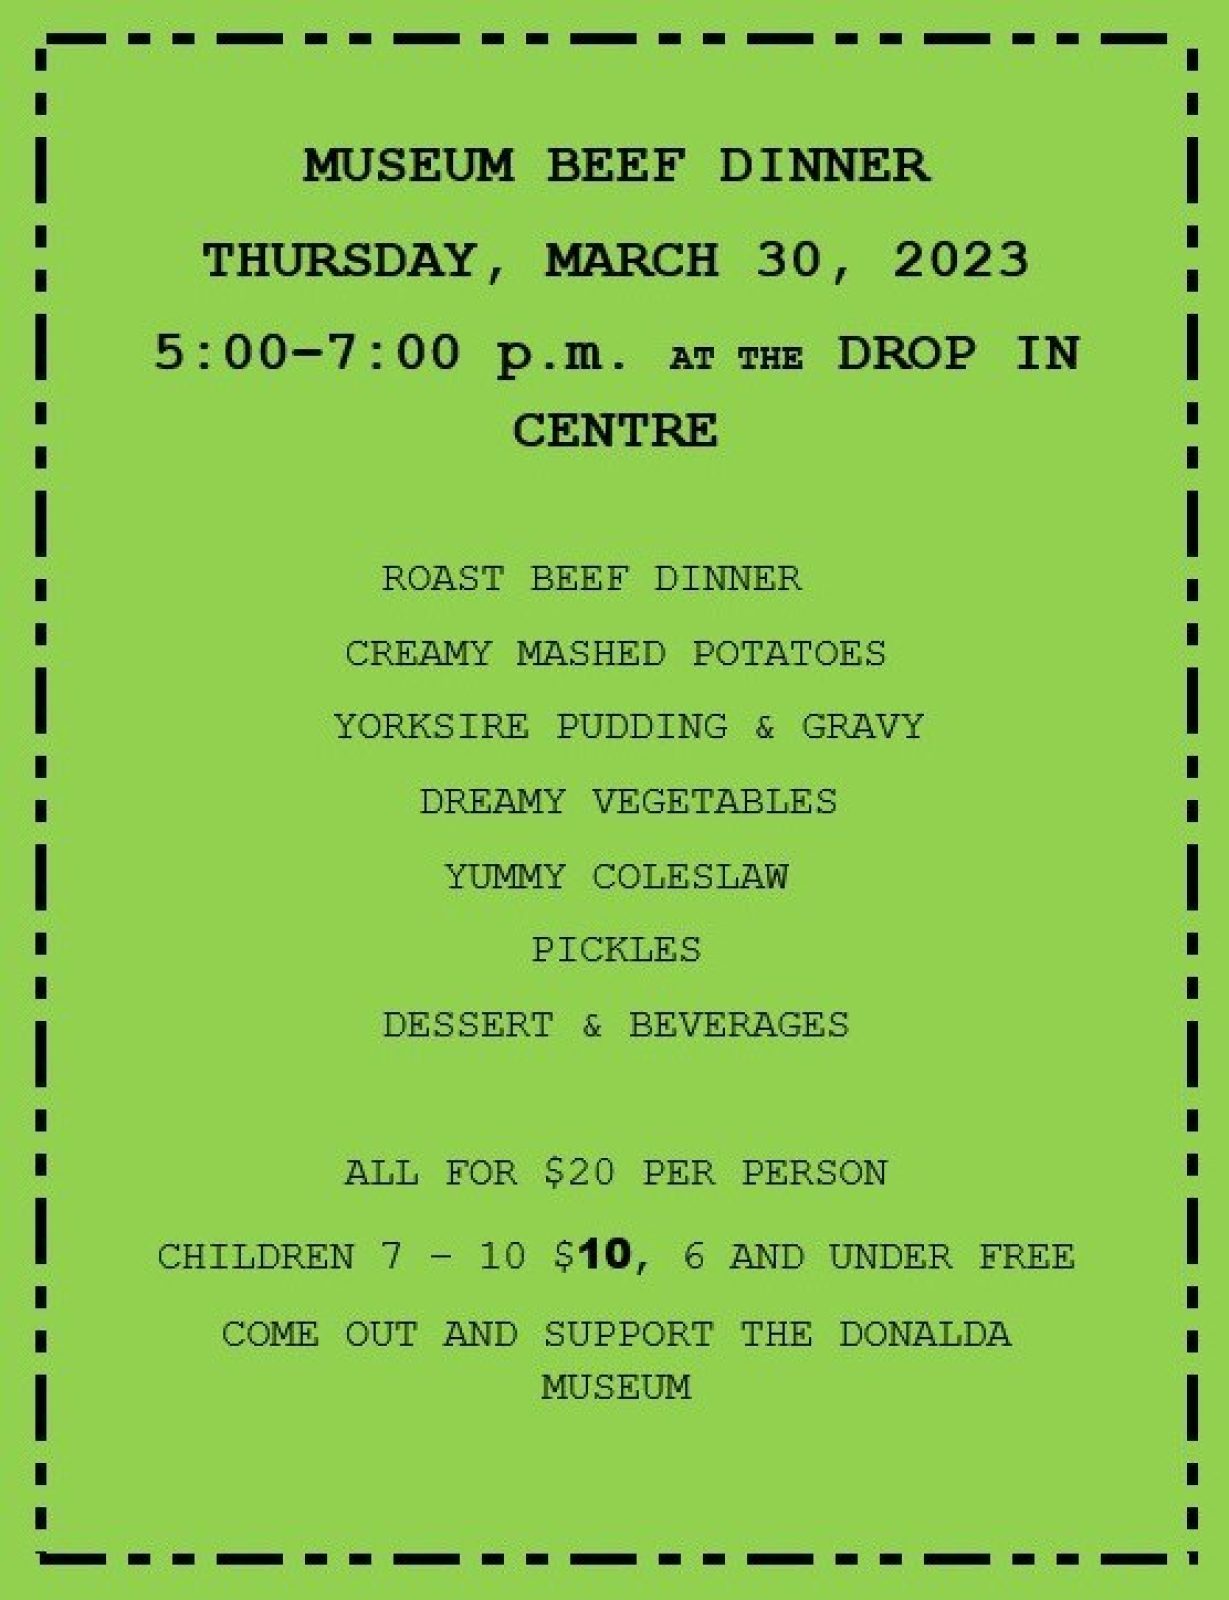 Donalda museum dinner march 30